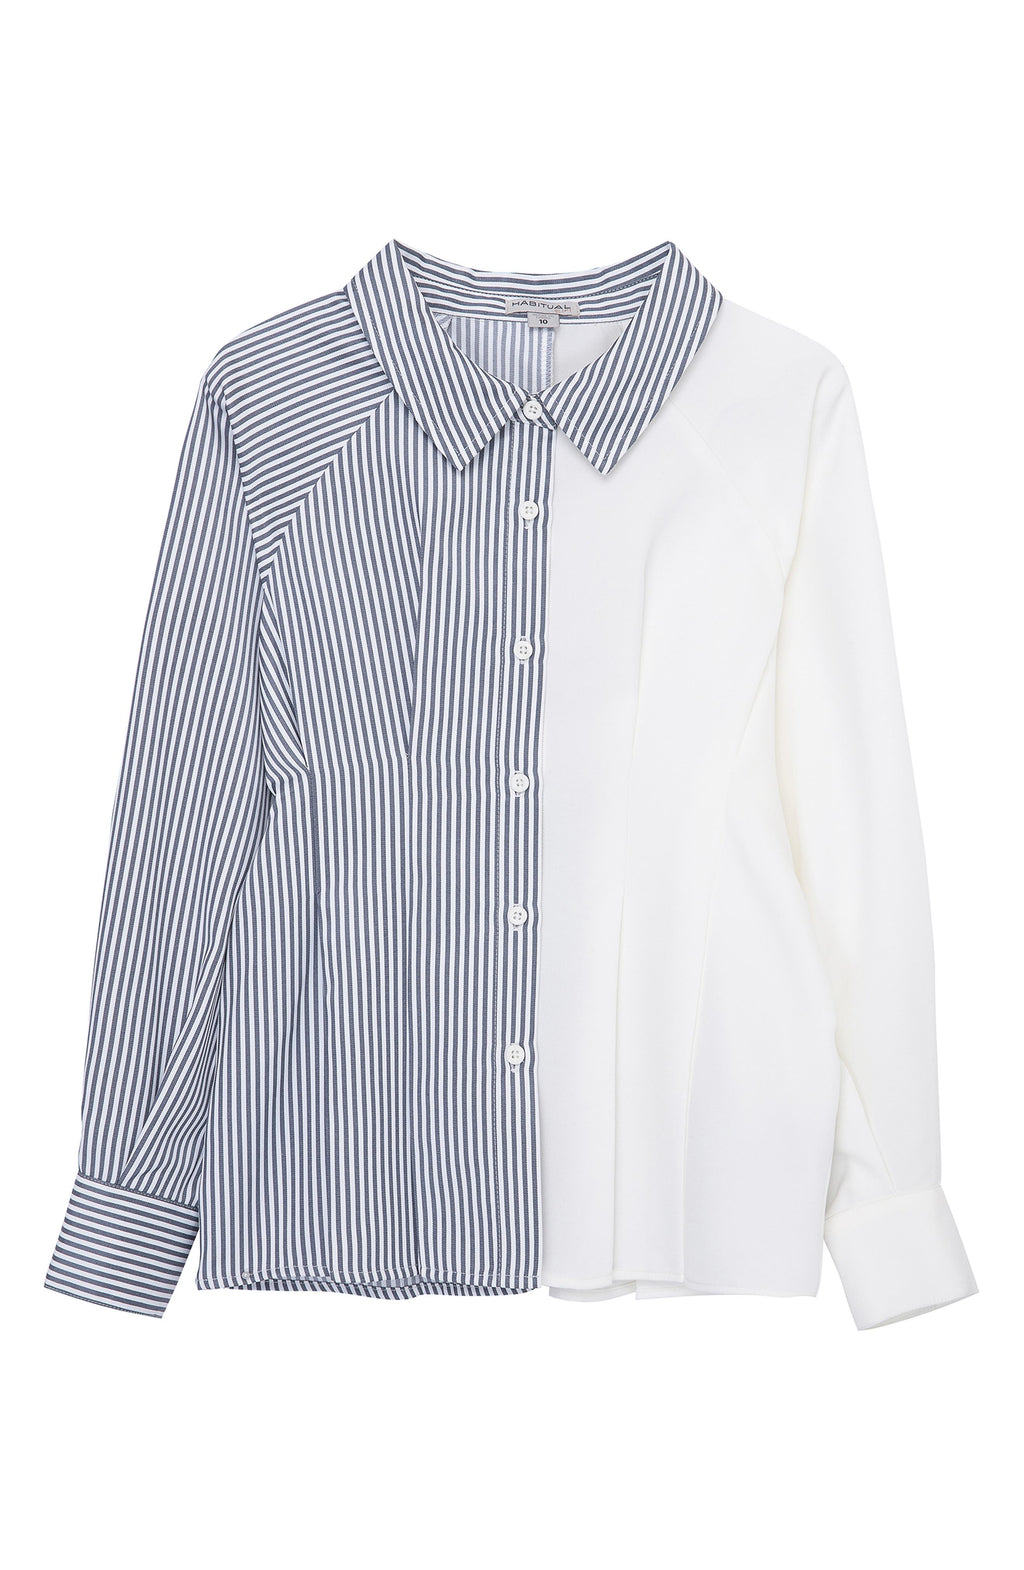 Habitual Kids' Coloblock Stripe Shirt, Main, color, Blue/ White Multi